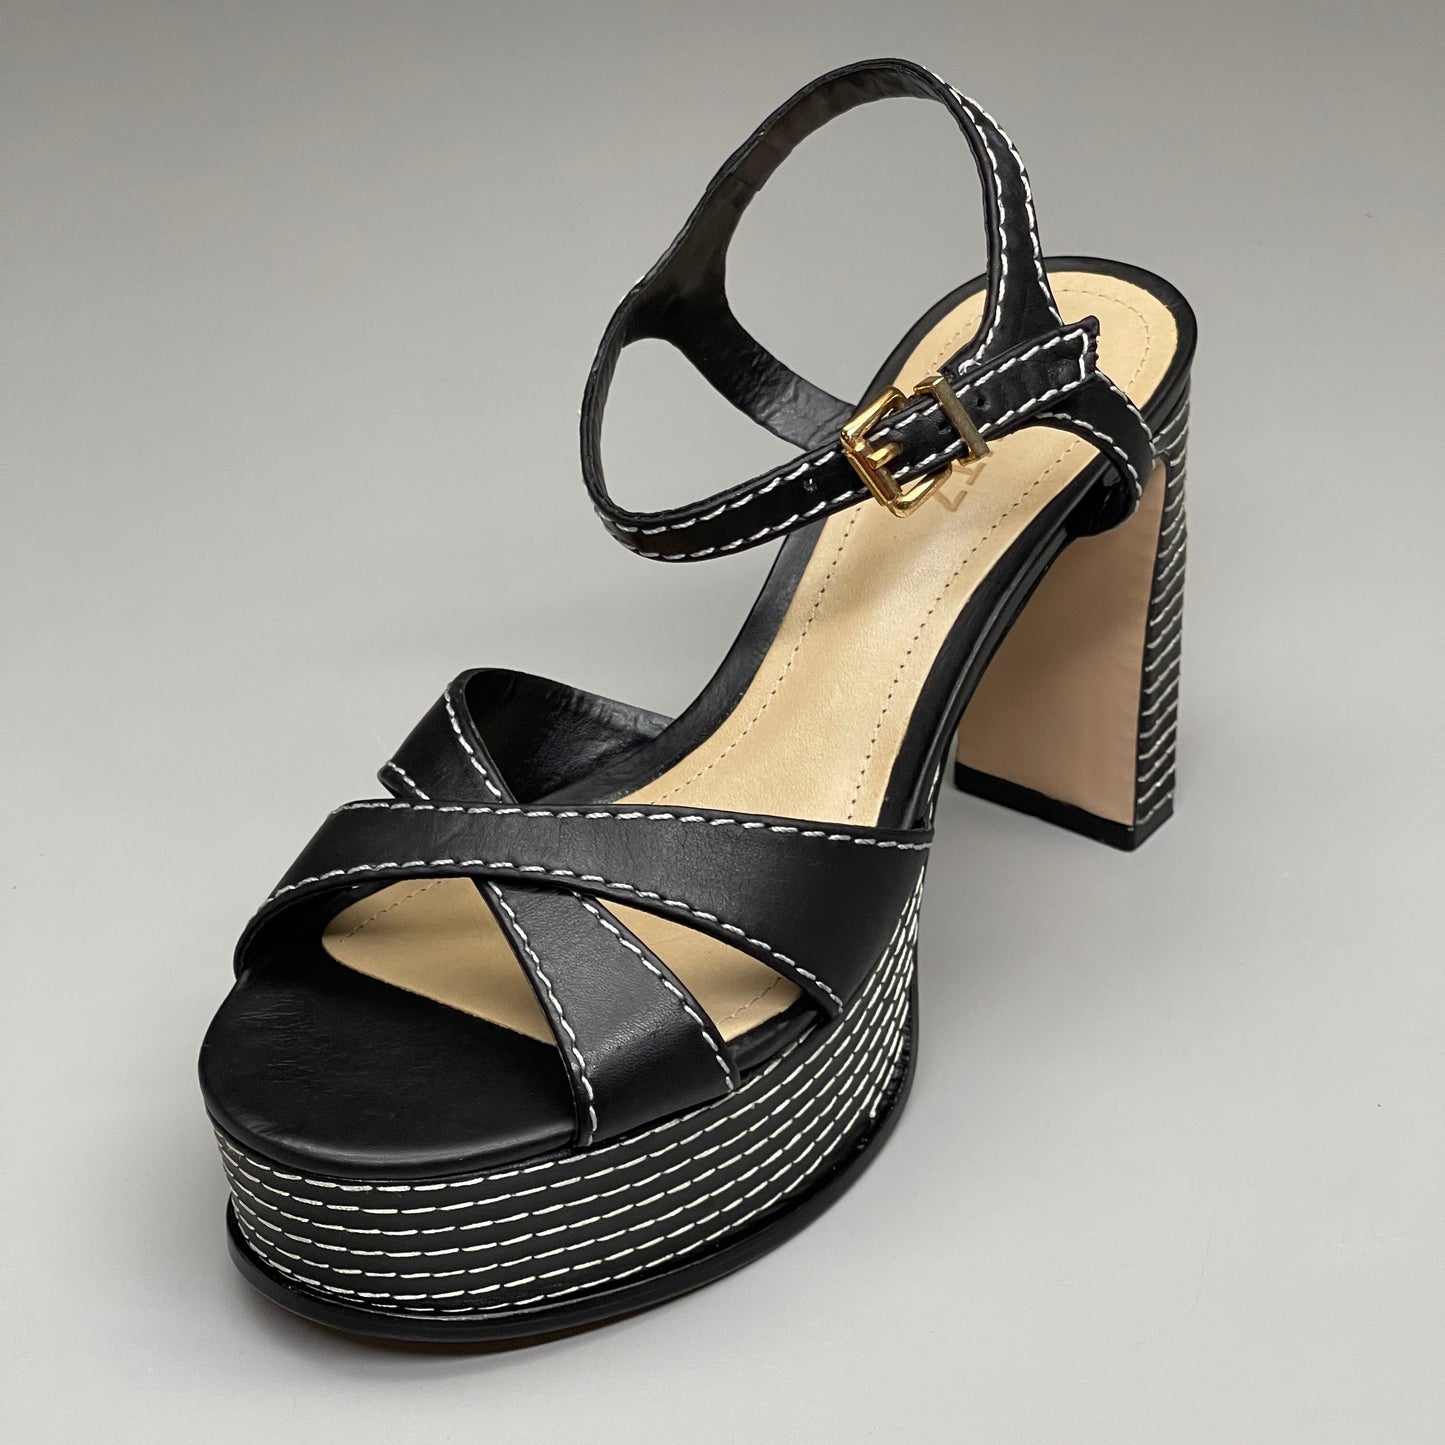 SCHUTZ Keefa Casual Women's Leather Sandal Black Platform 4" Heel Shoes Sz 7B (New)